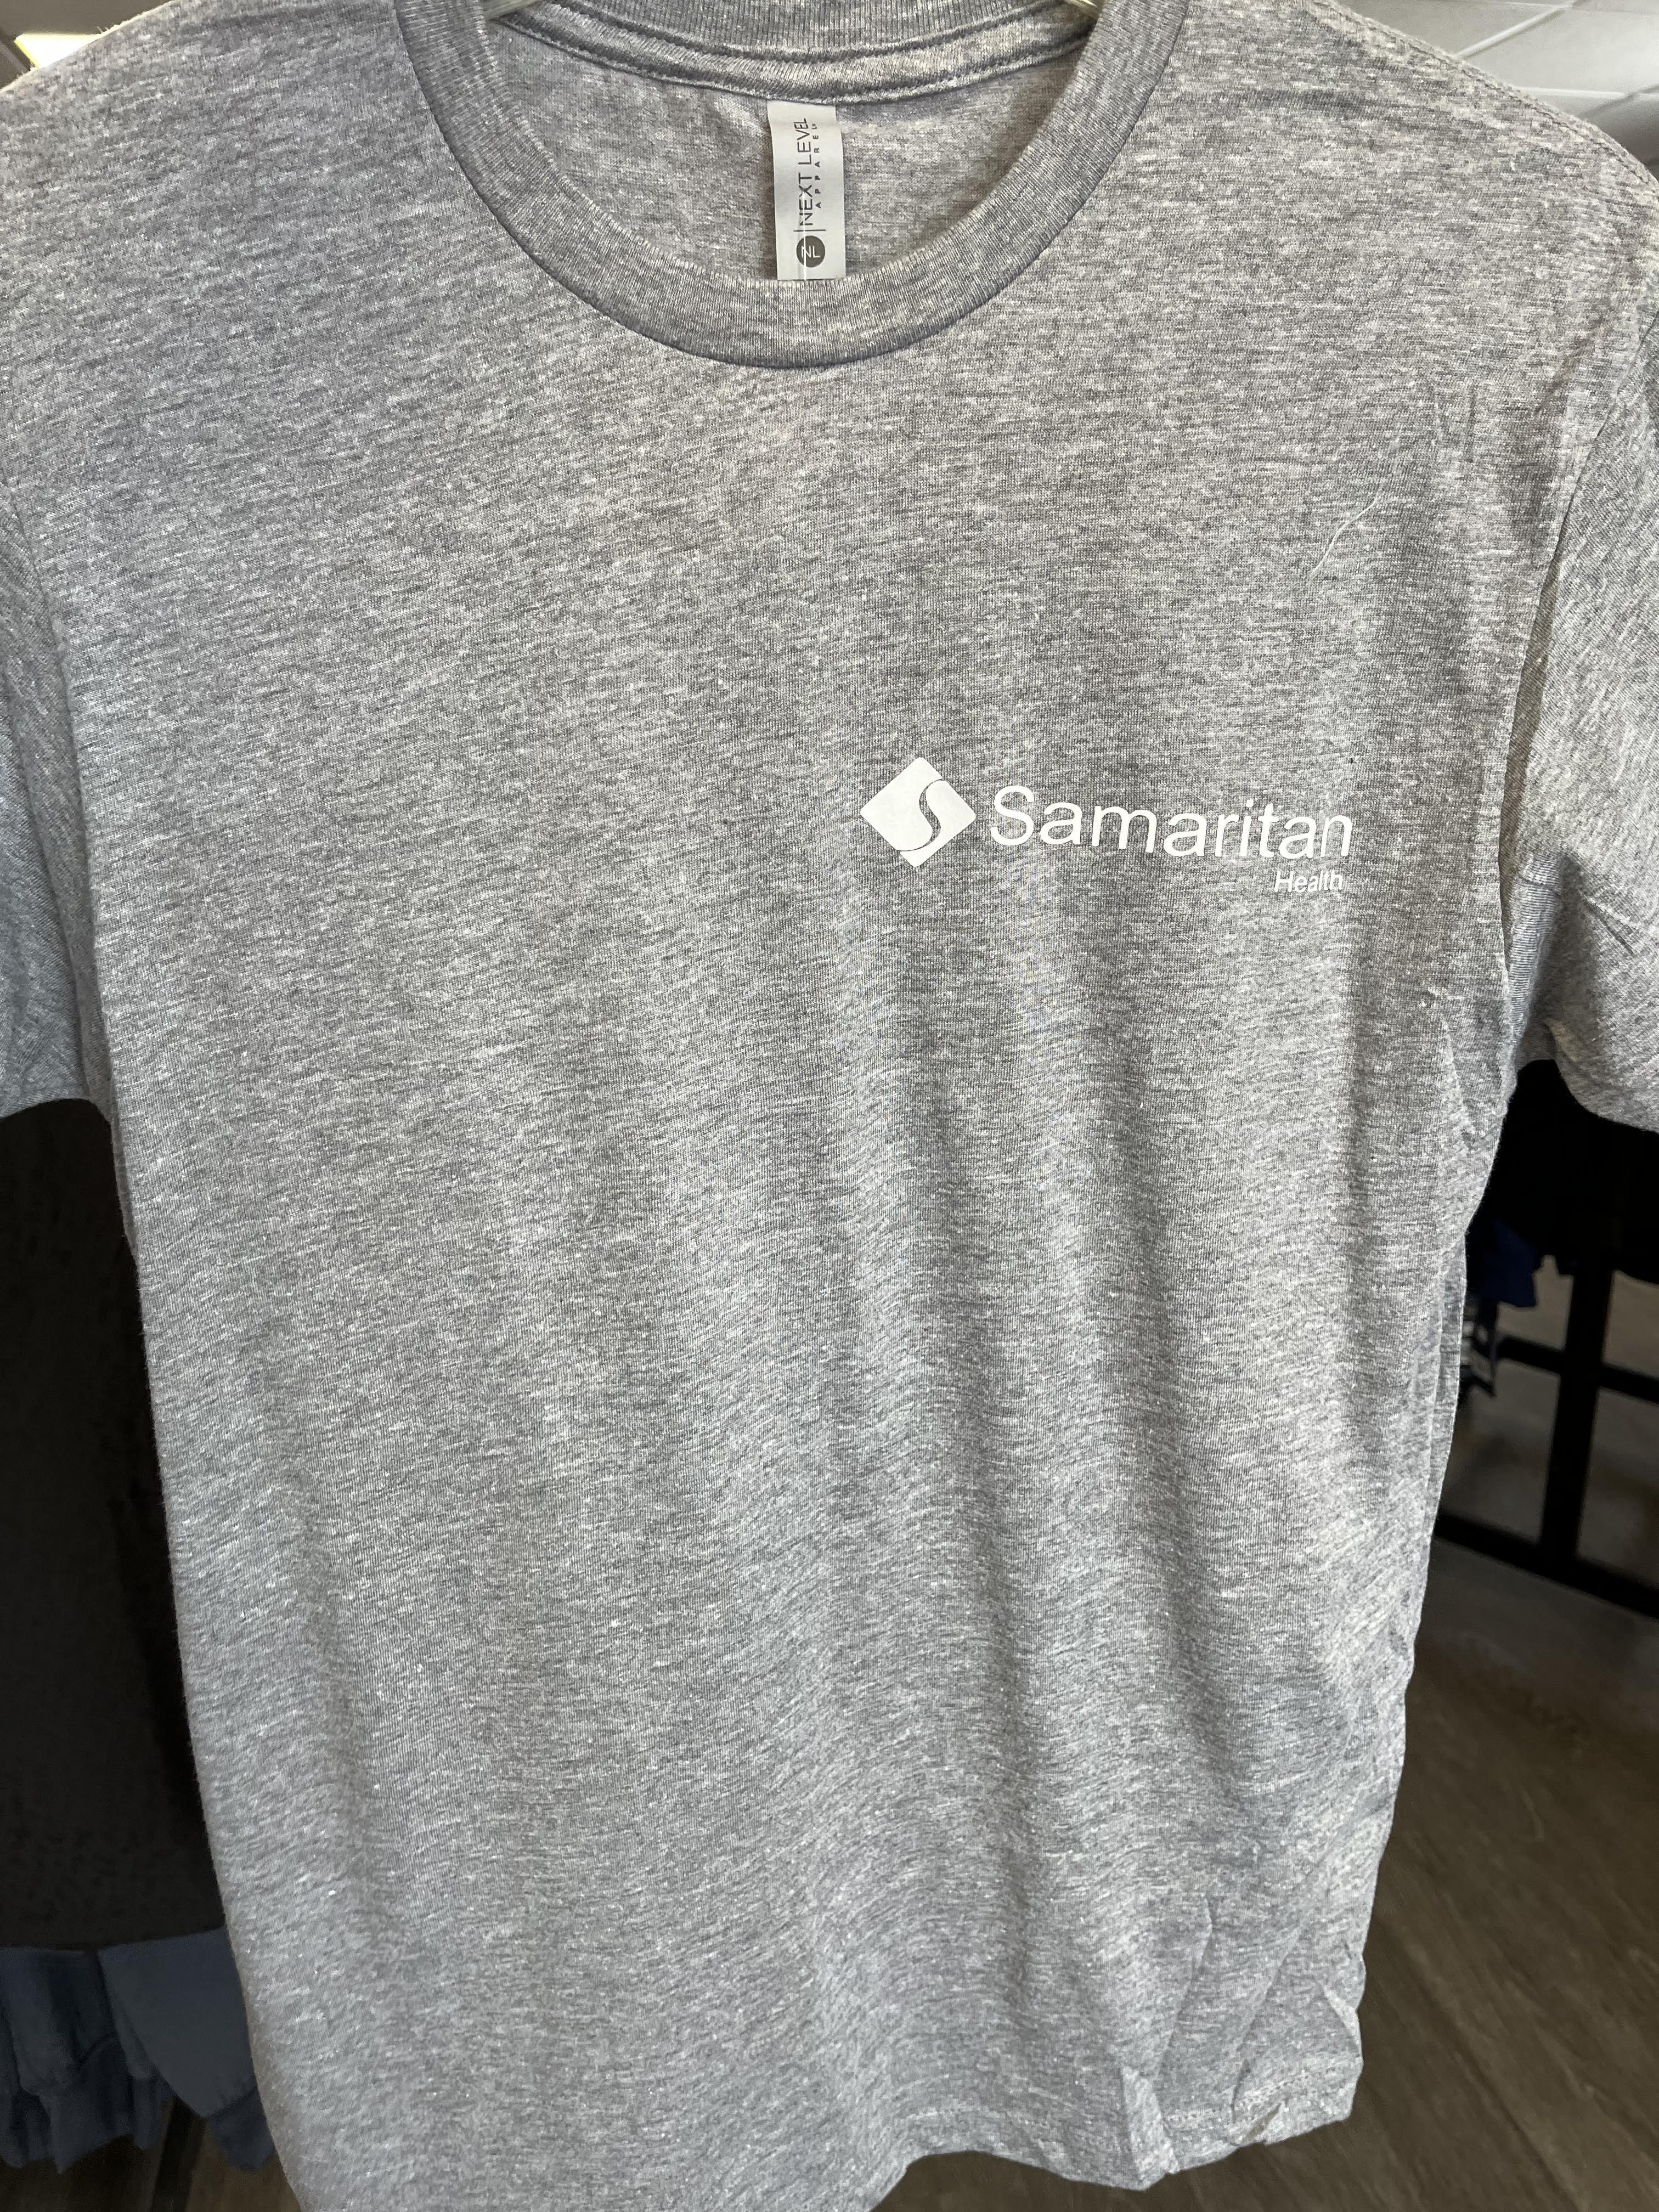 SMC light grey short sleeve t shirt -The Scrub Hub